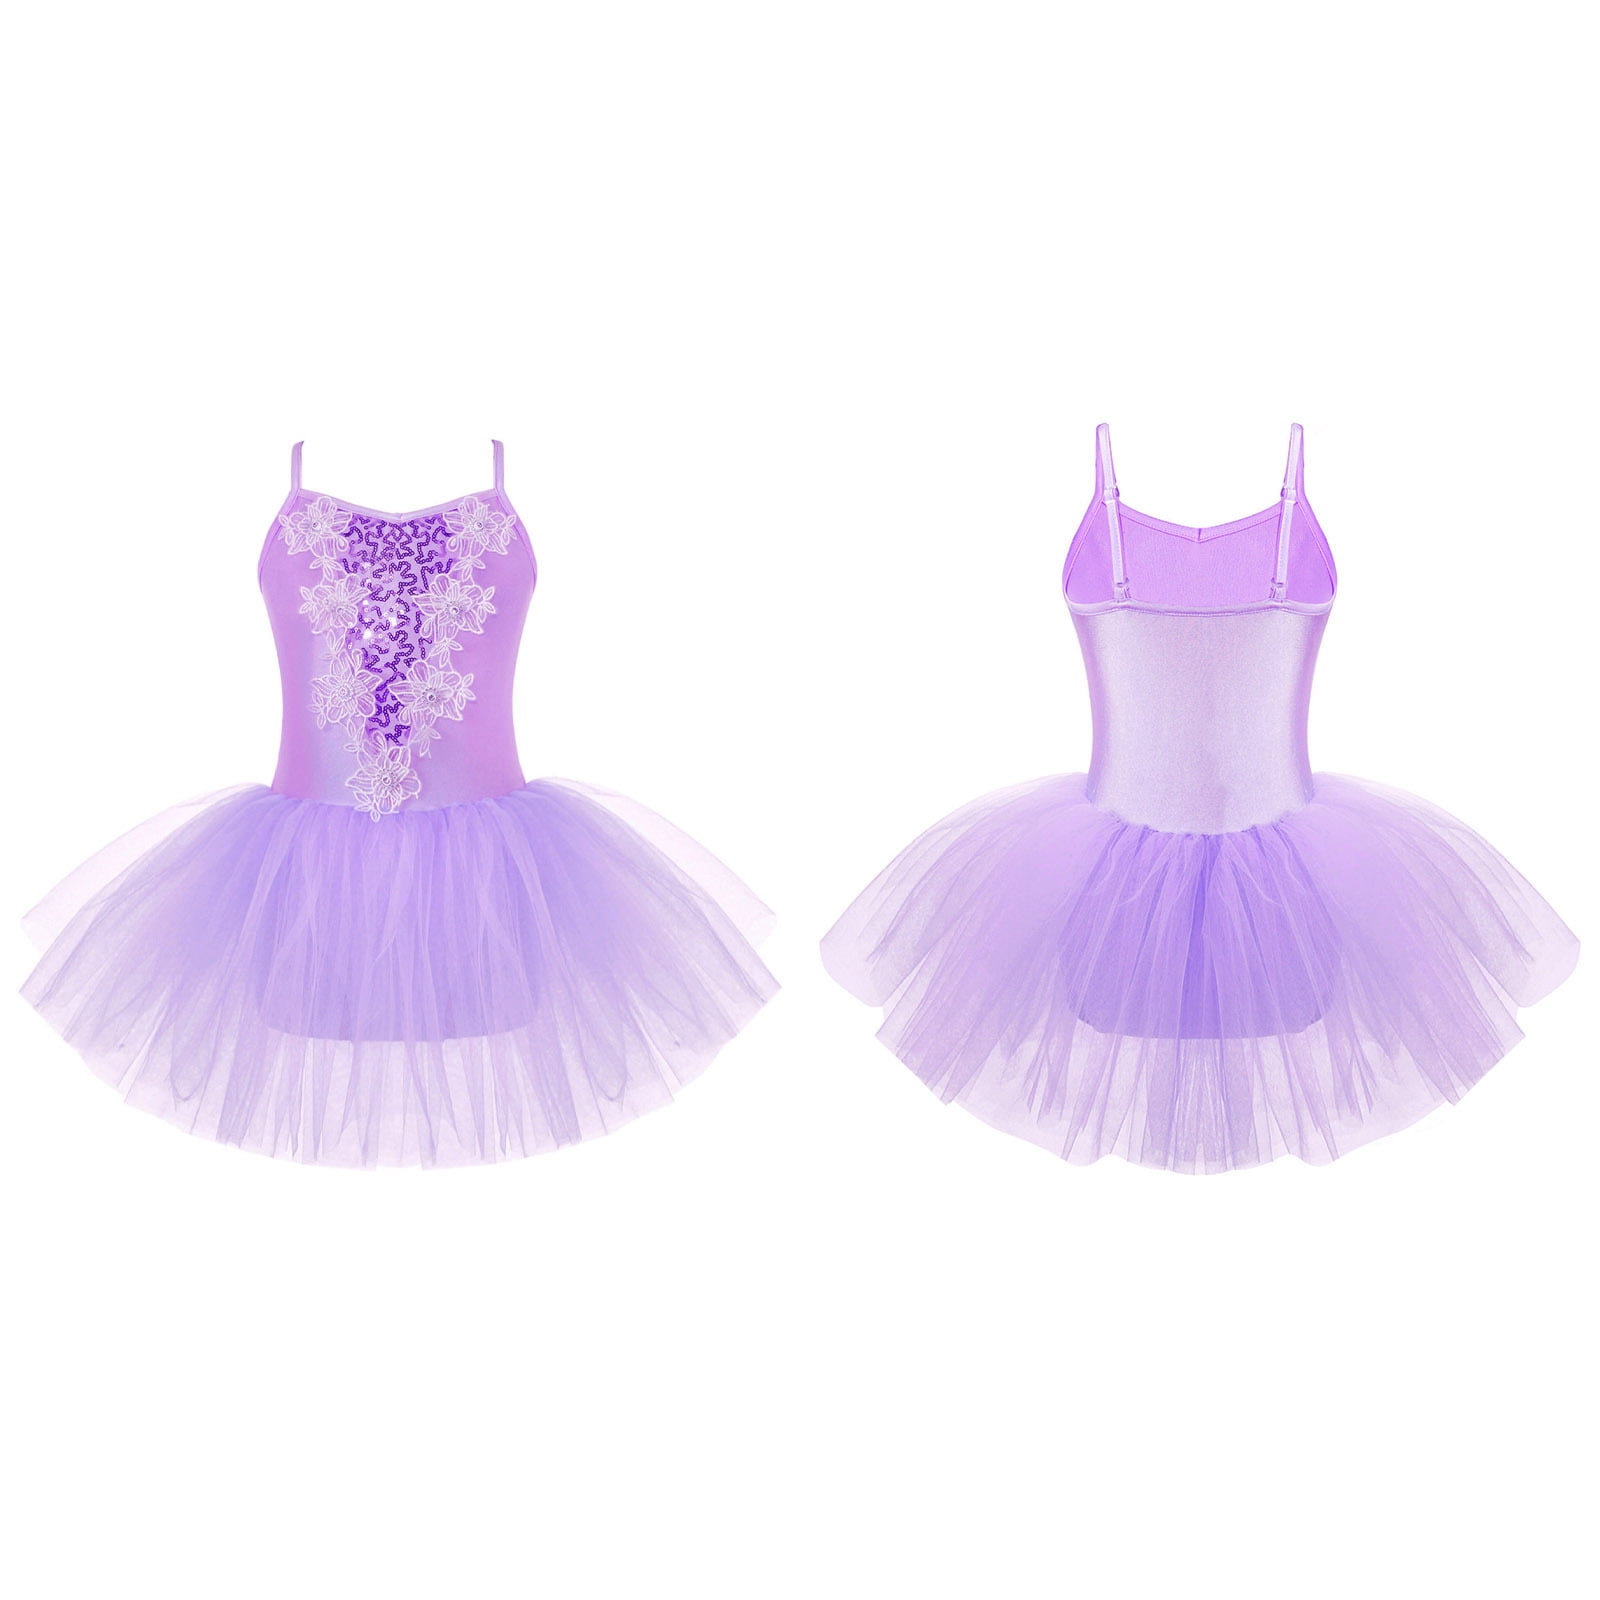 DPOIS Kids Girls Sequin Lace Swan Lake Ballet Dance Dress Tutu Skirted ...